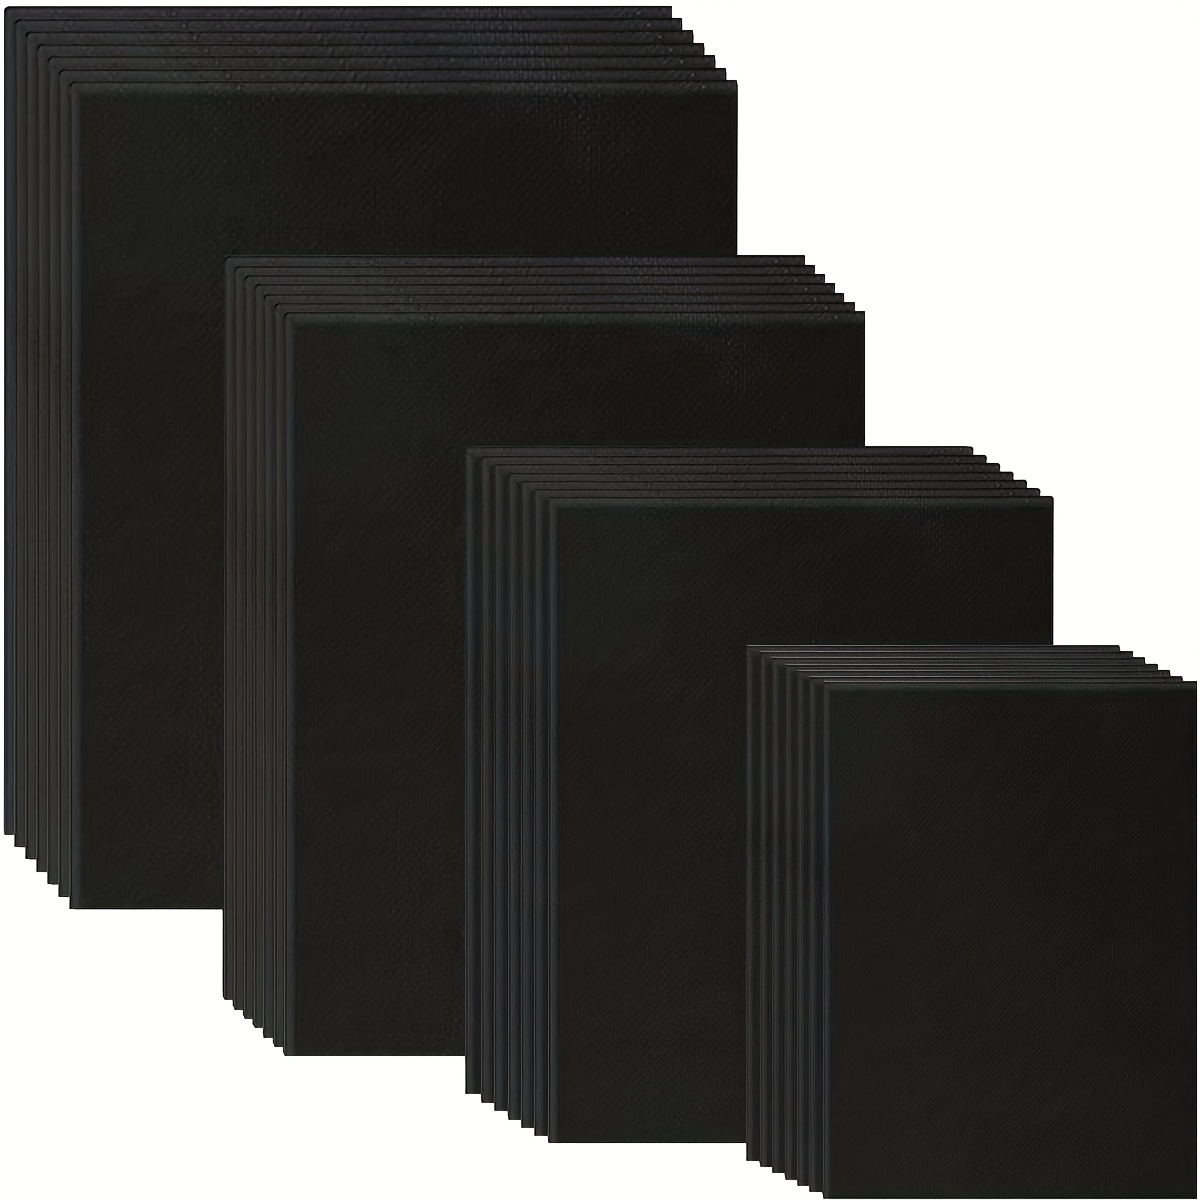  PHOENIX Black Canvas Panels 10x10 Inch, 6 Pack - 8 Oz